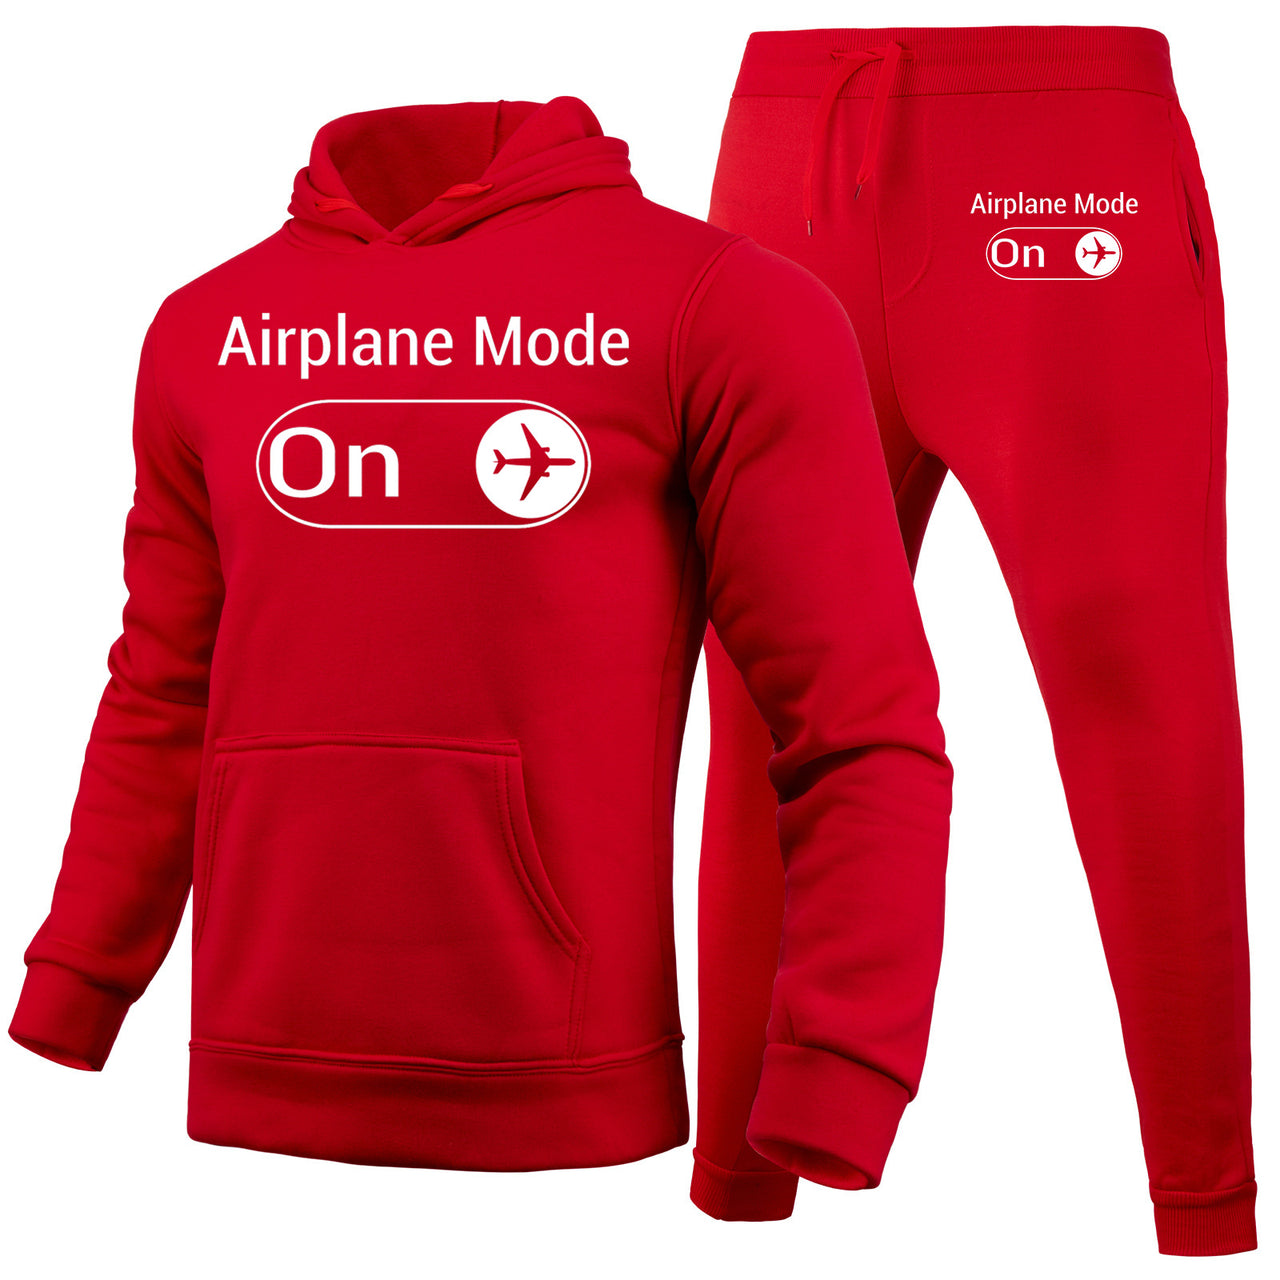 Airplane Mode On Designed Hoodies & Sweatpants Set